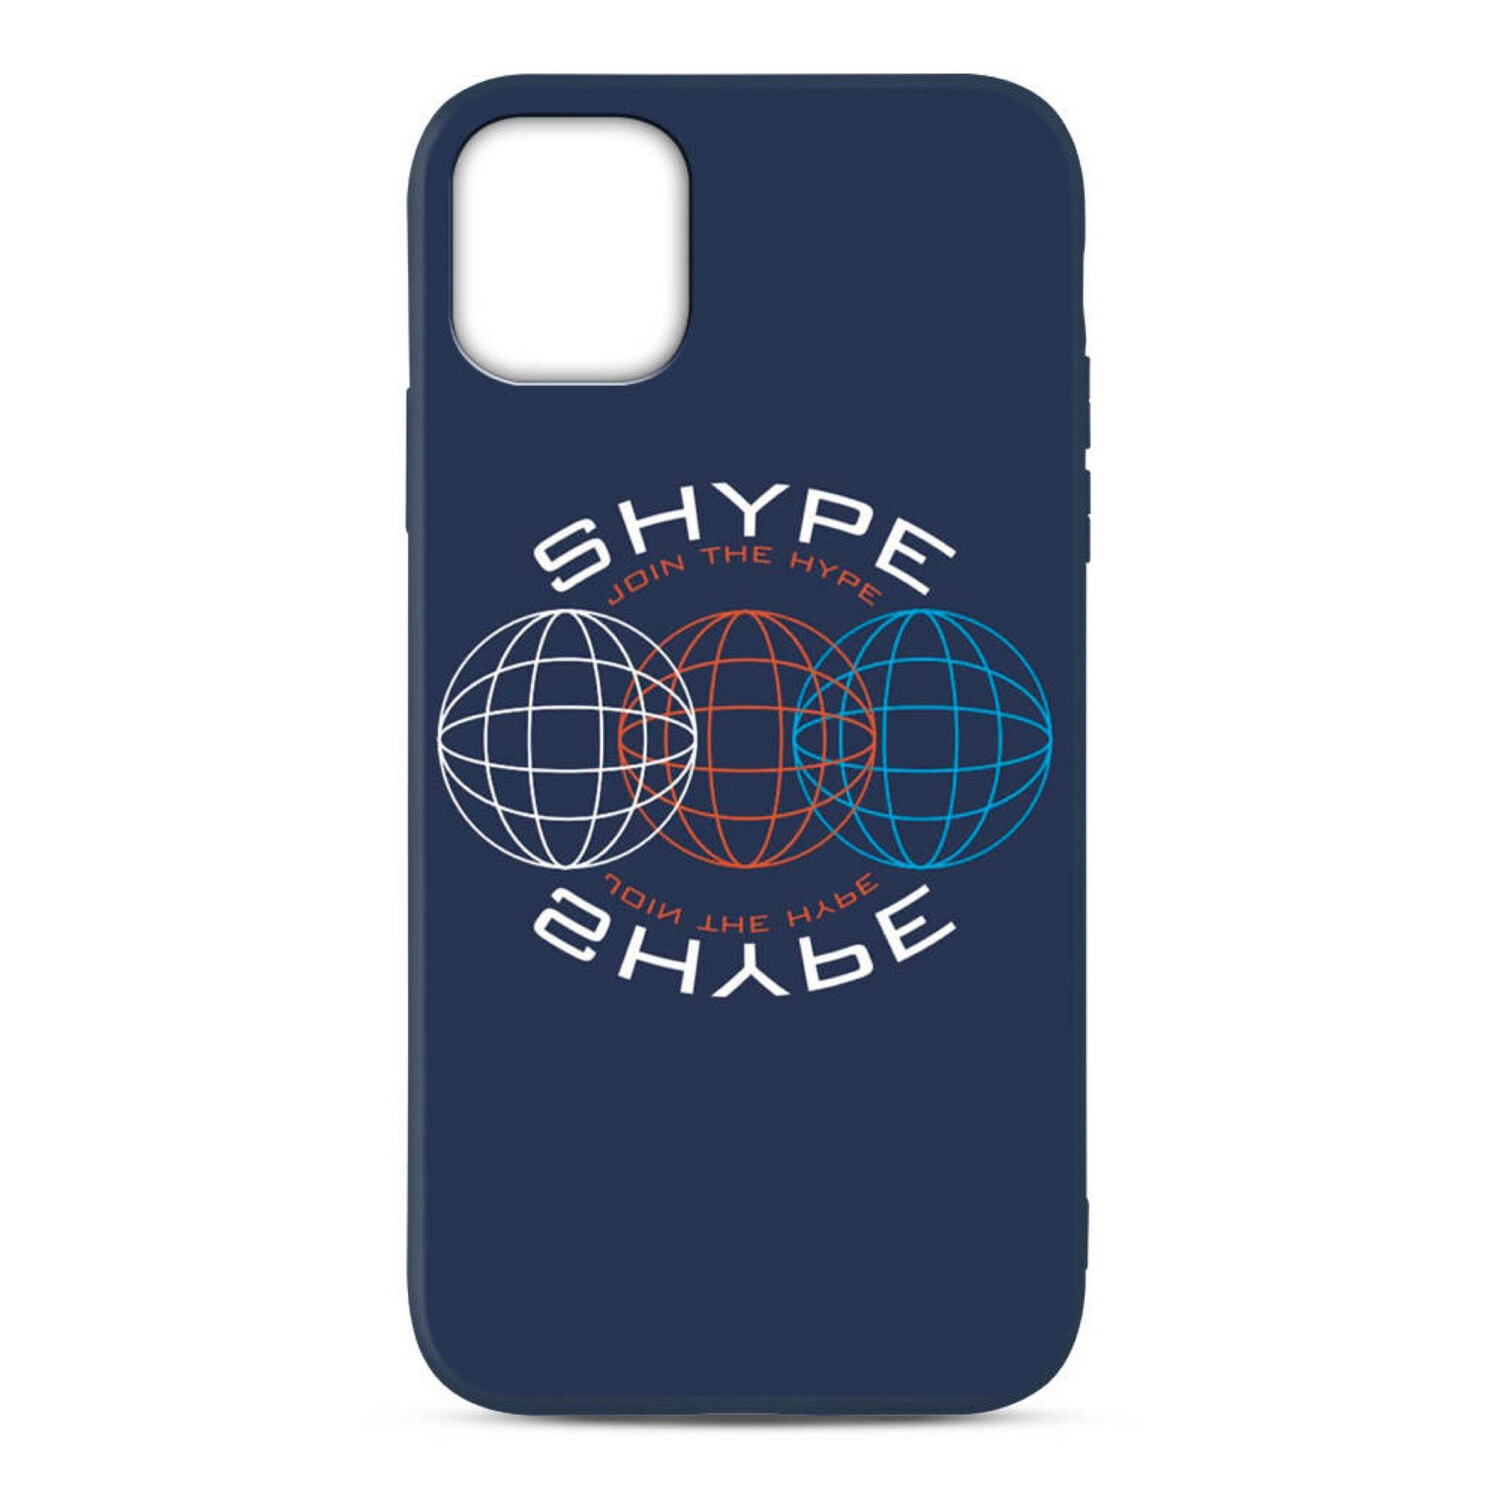 Shype Phone Case - Dark Blue